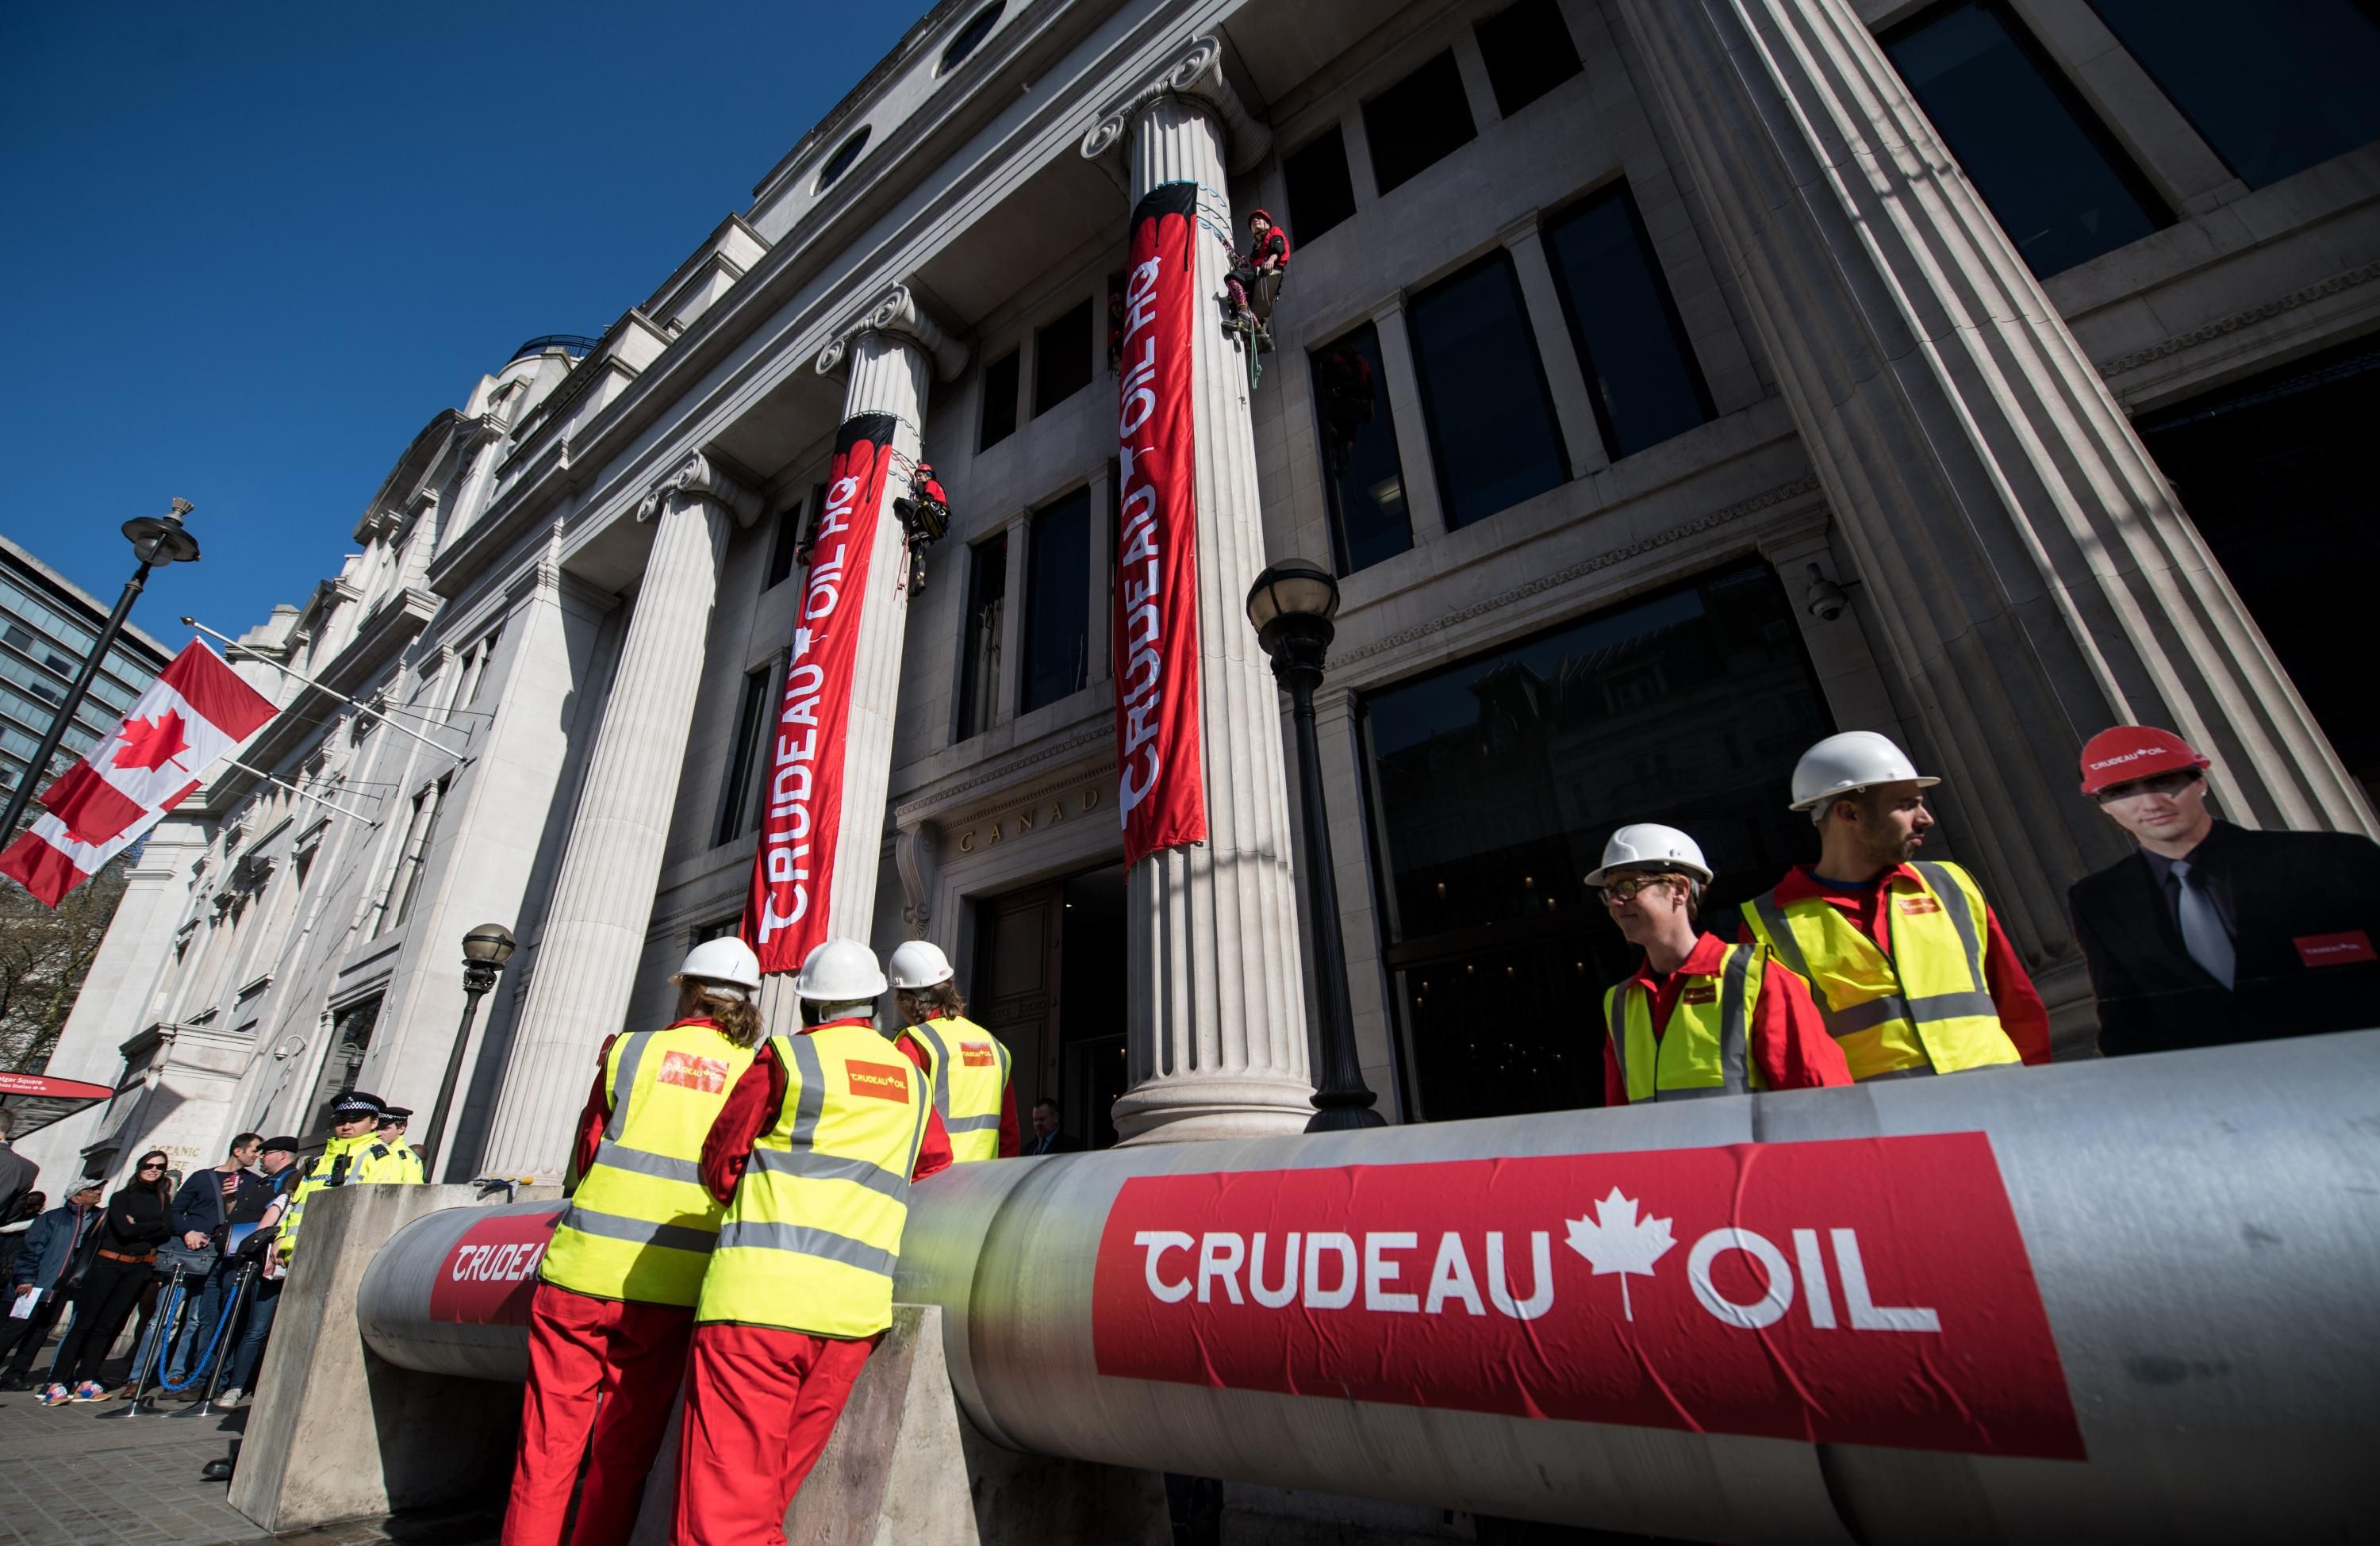 Trudeau Oil